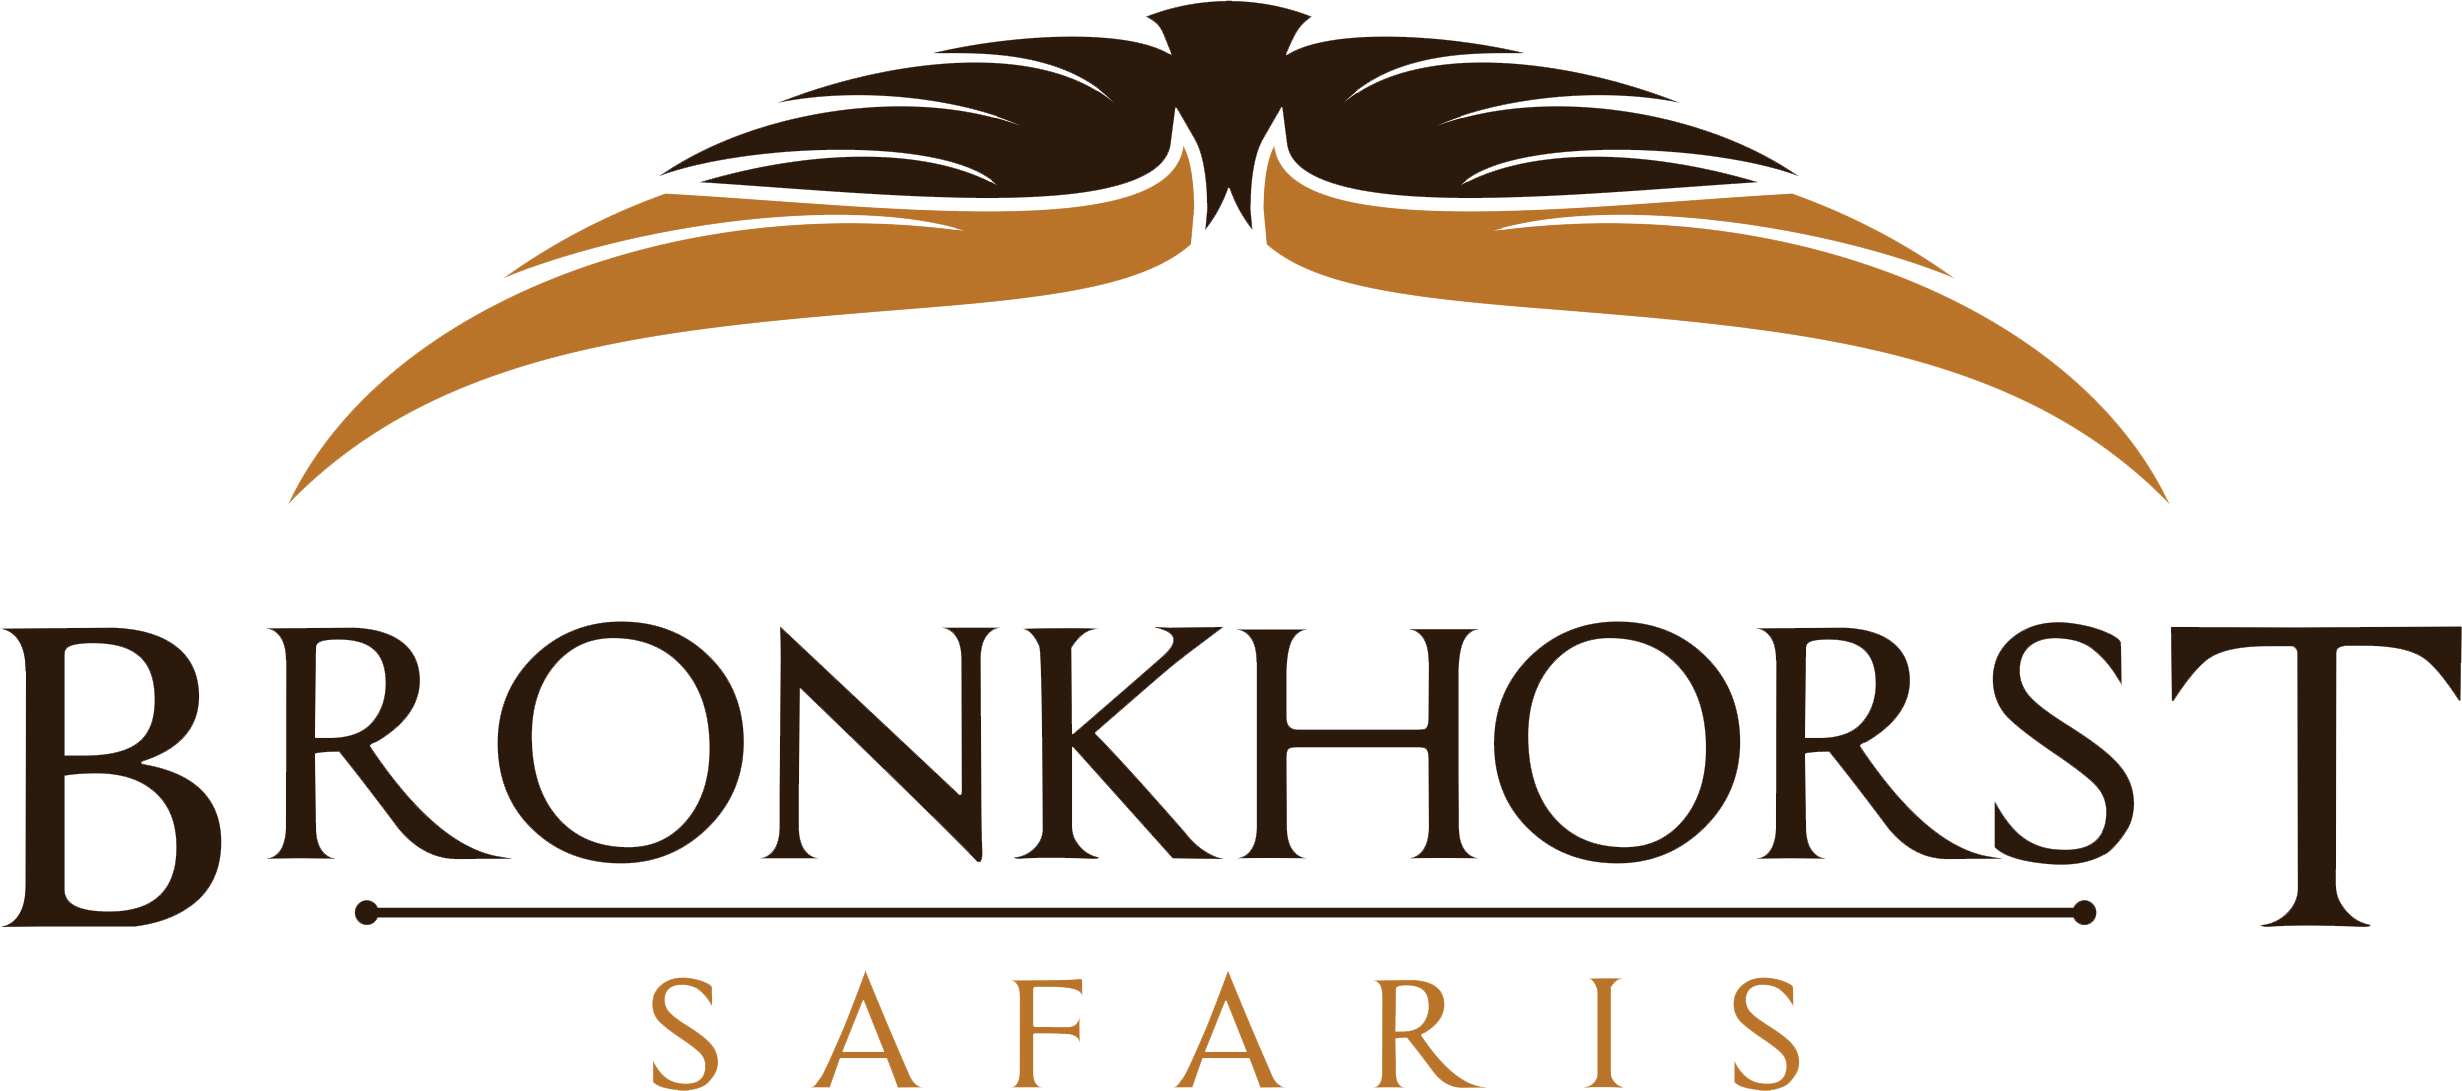 Bronkhorst Safaris | South Africa